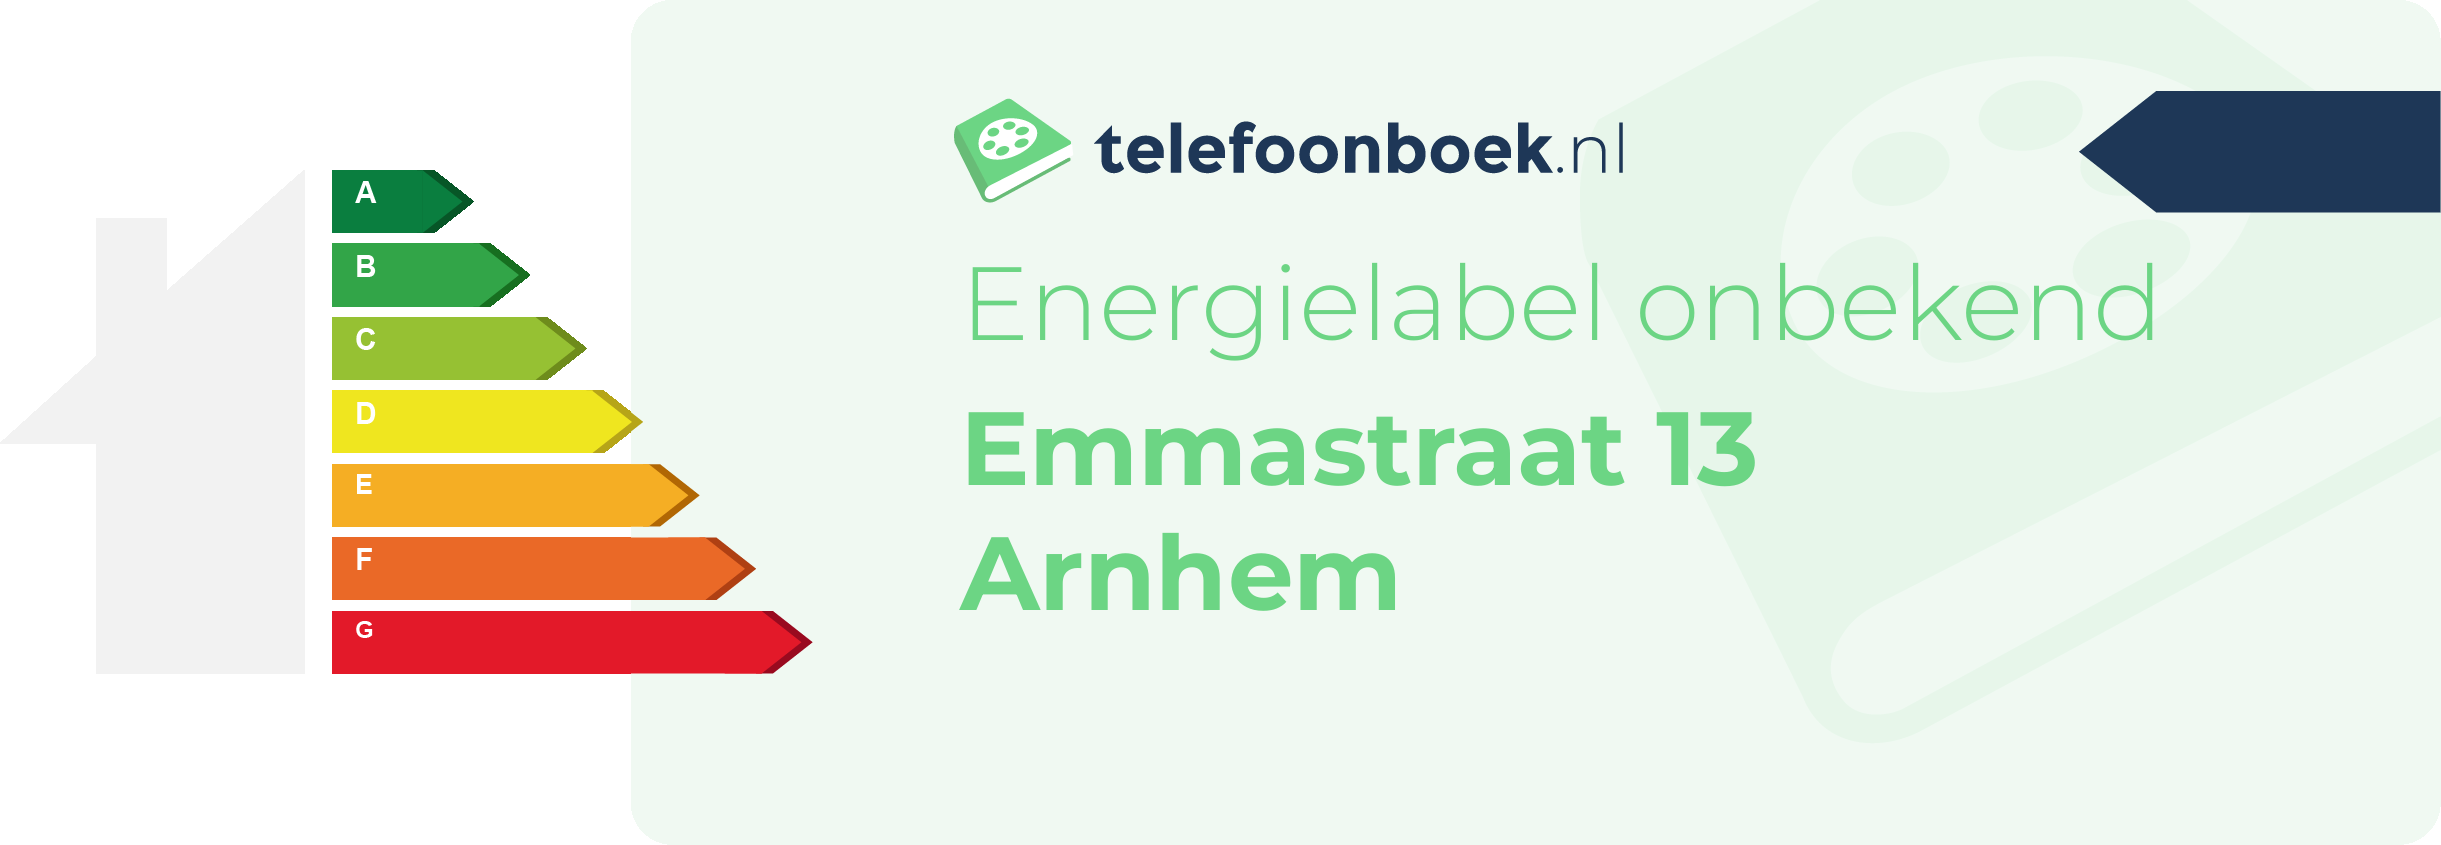 Energielabel Emmastraat 13 Arnhem